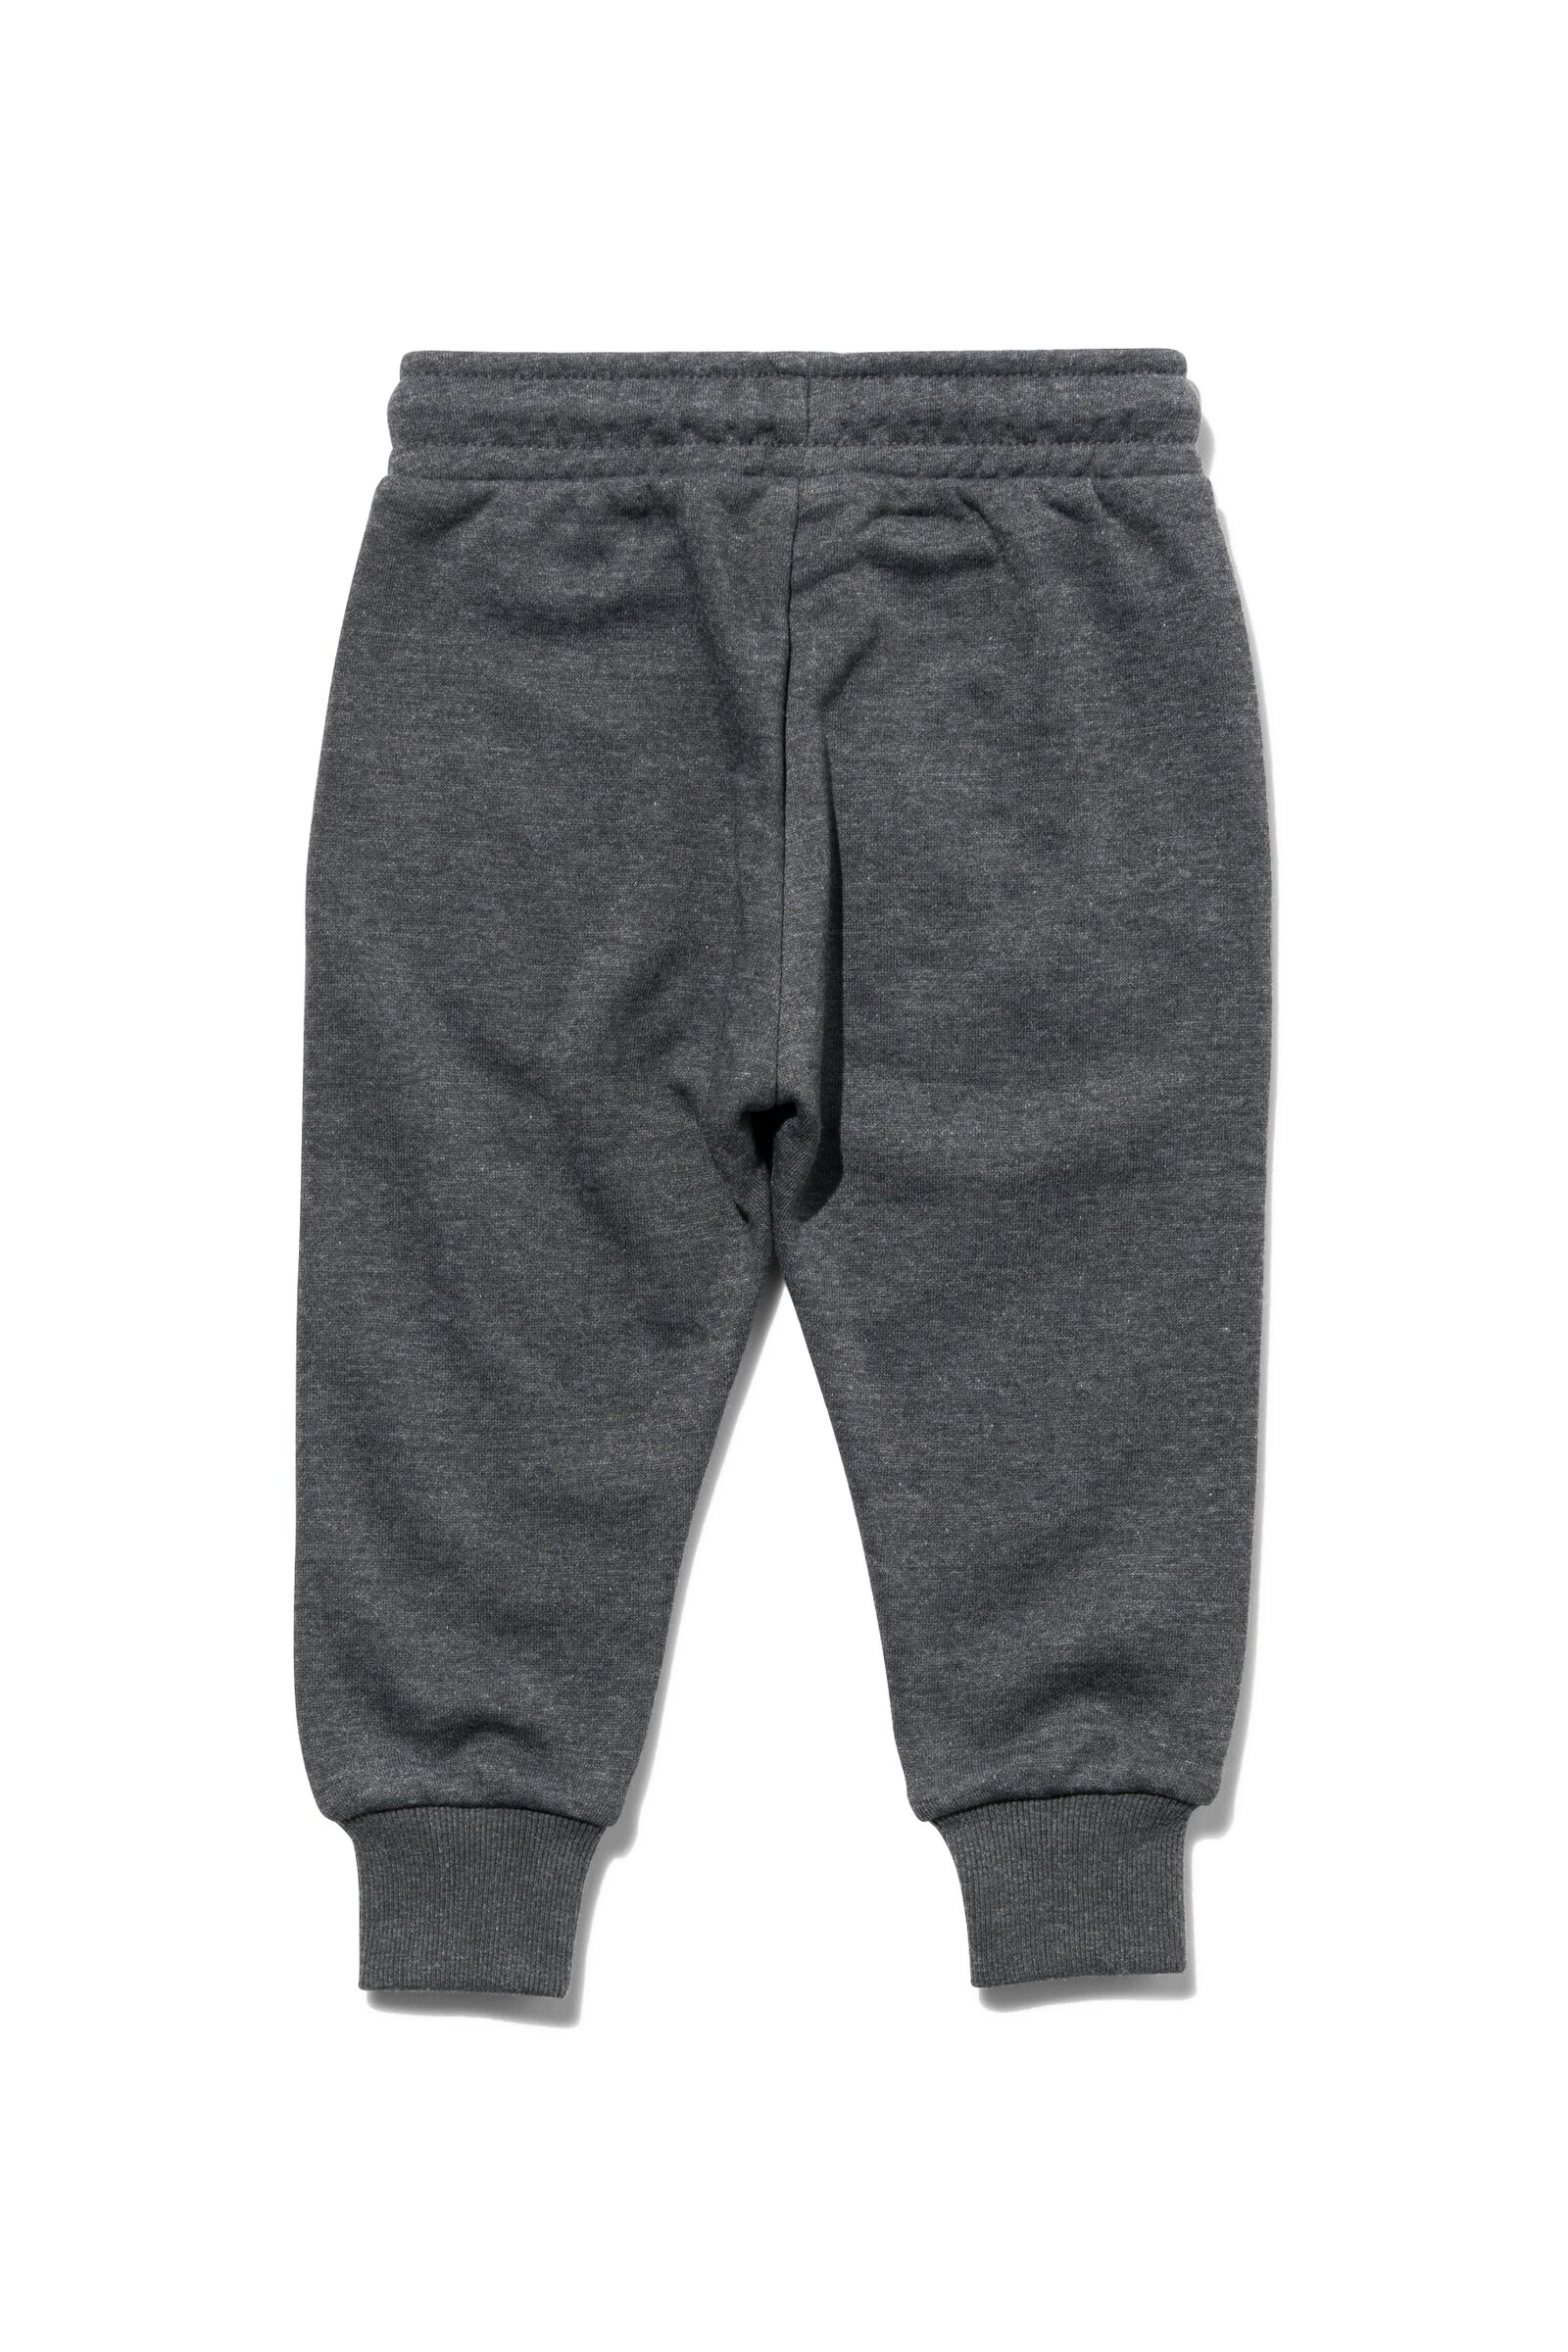 pantalon sweat bébé gris foncé 80 - 33171046 - HEMA